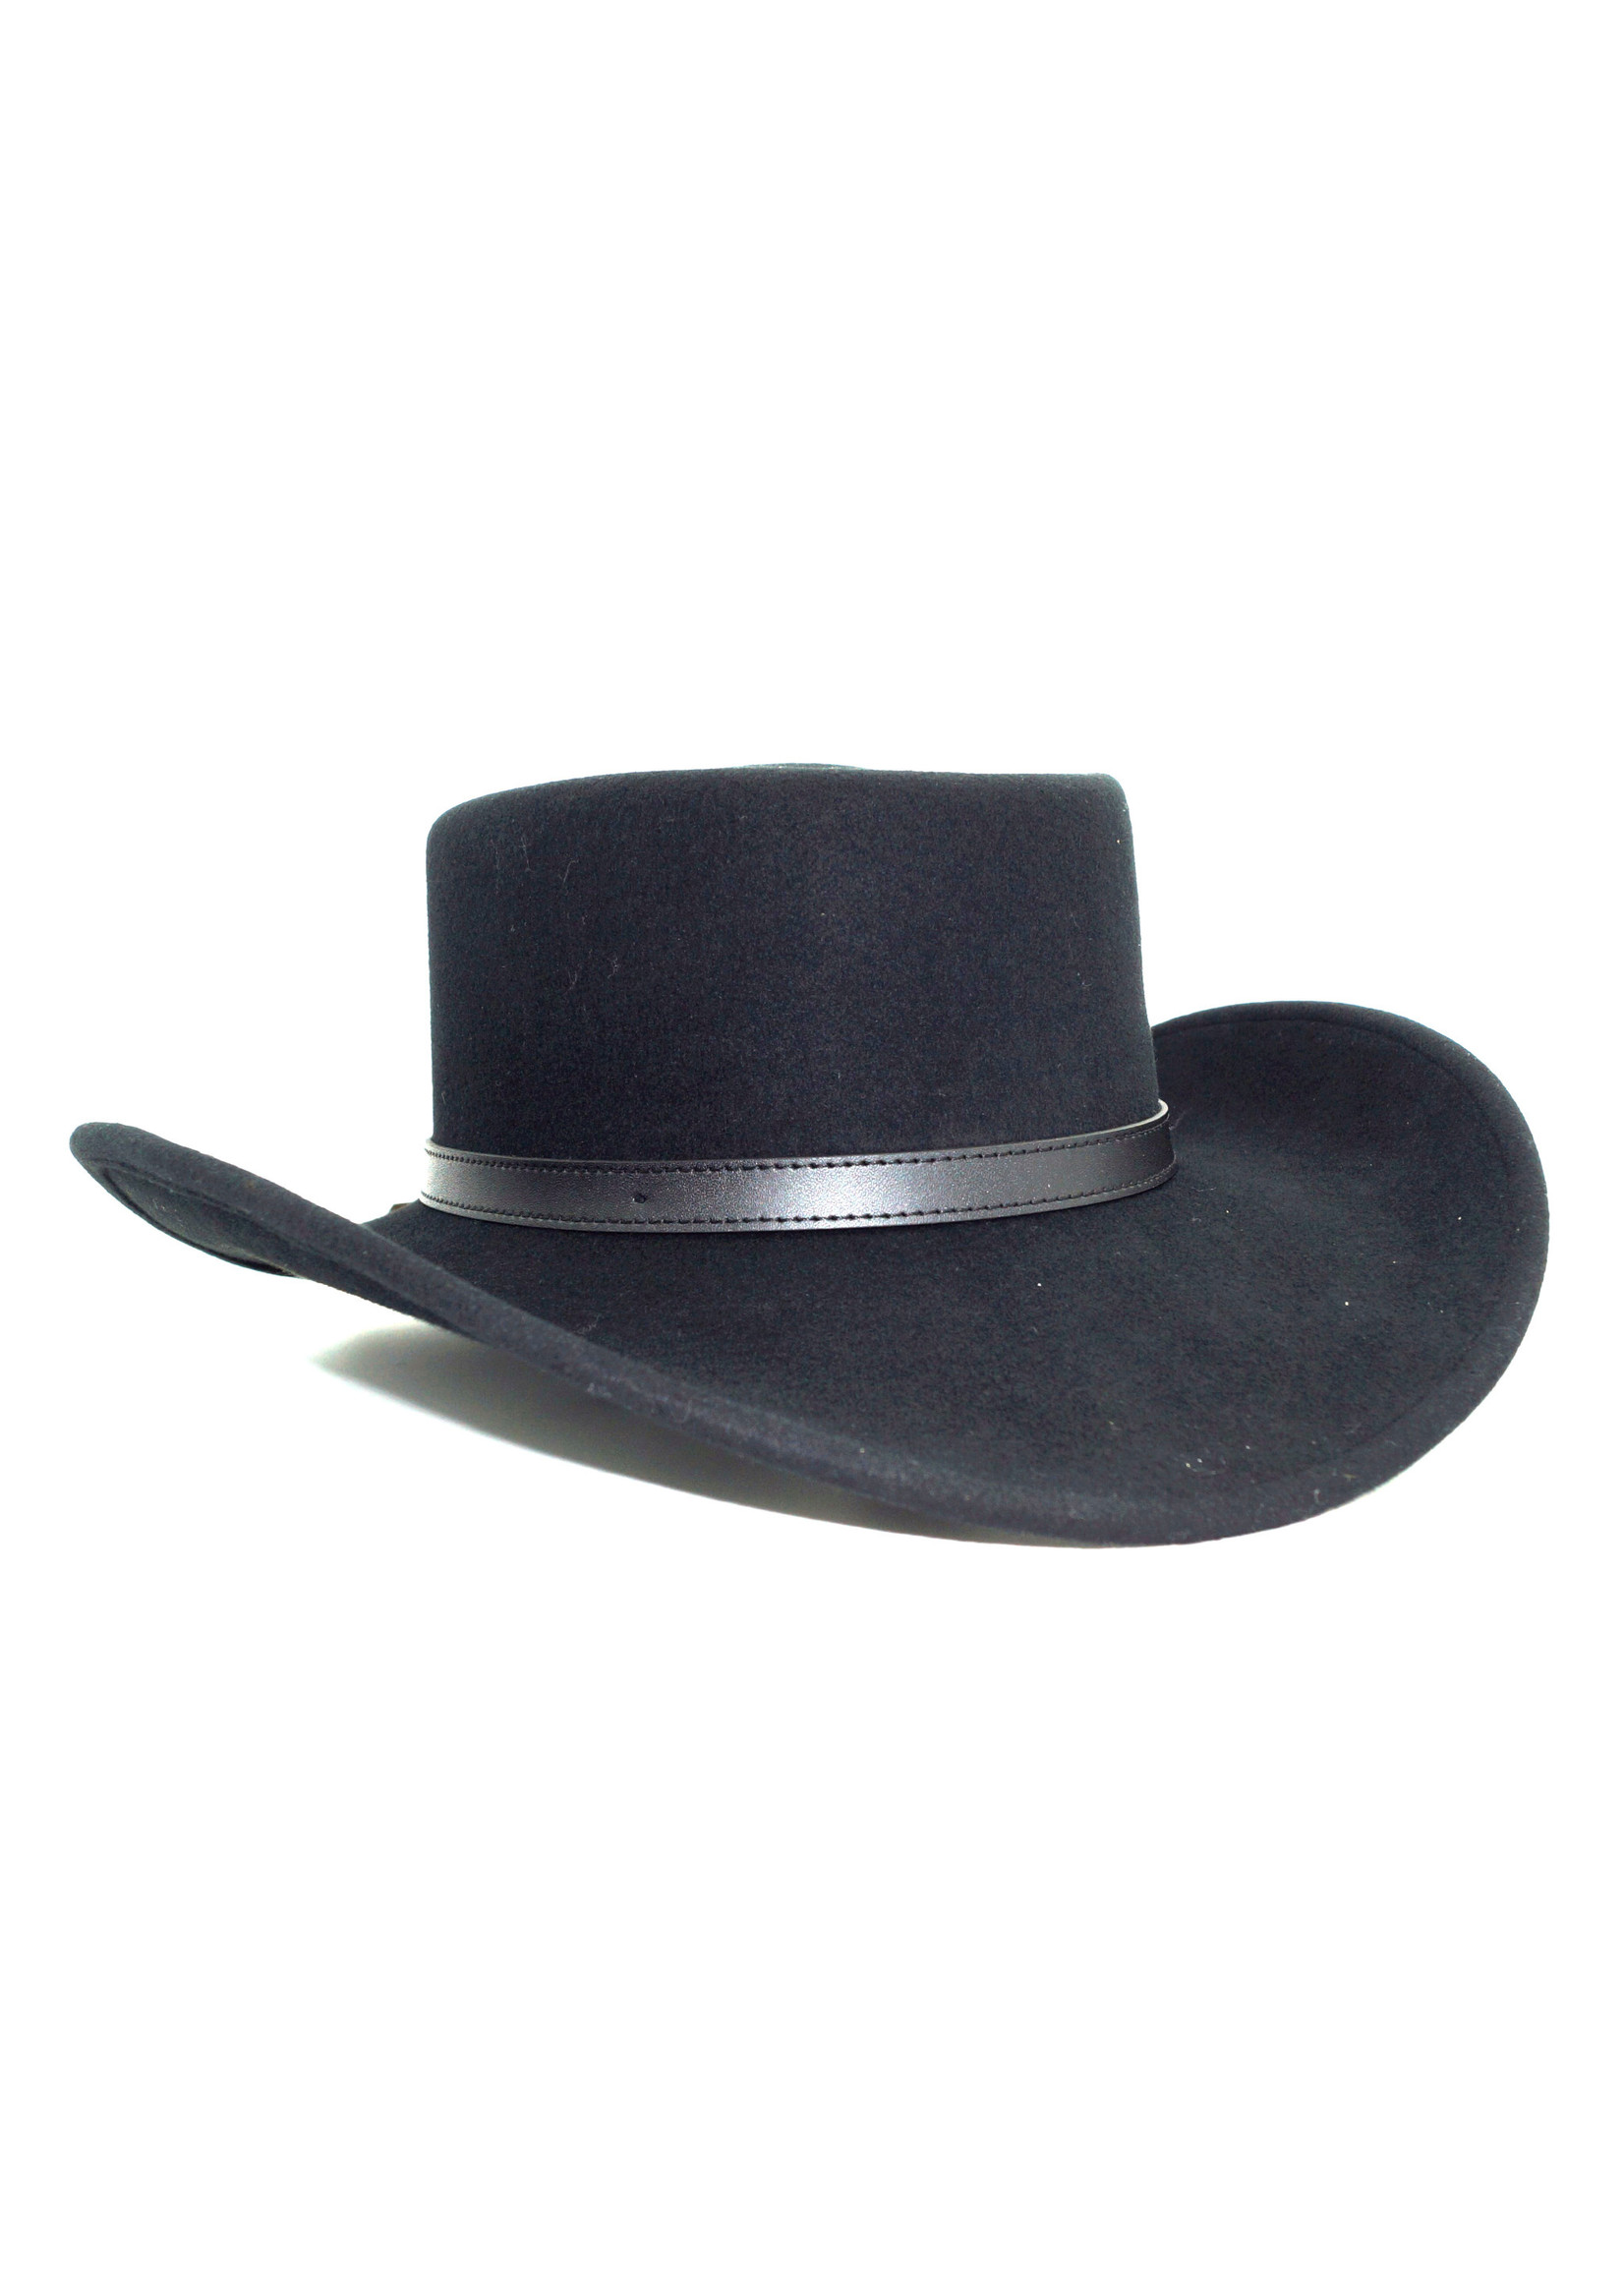 Twister Gambler Black Gambler Crushable Hat 7211801